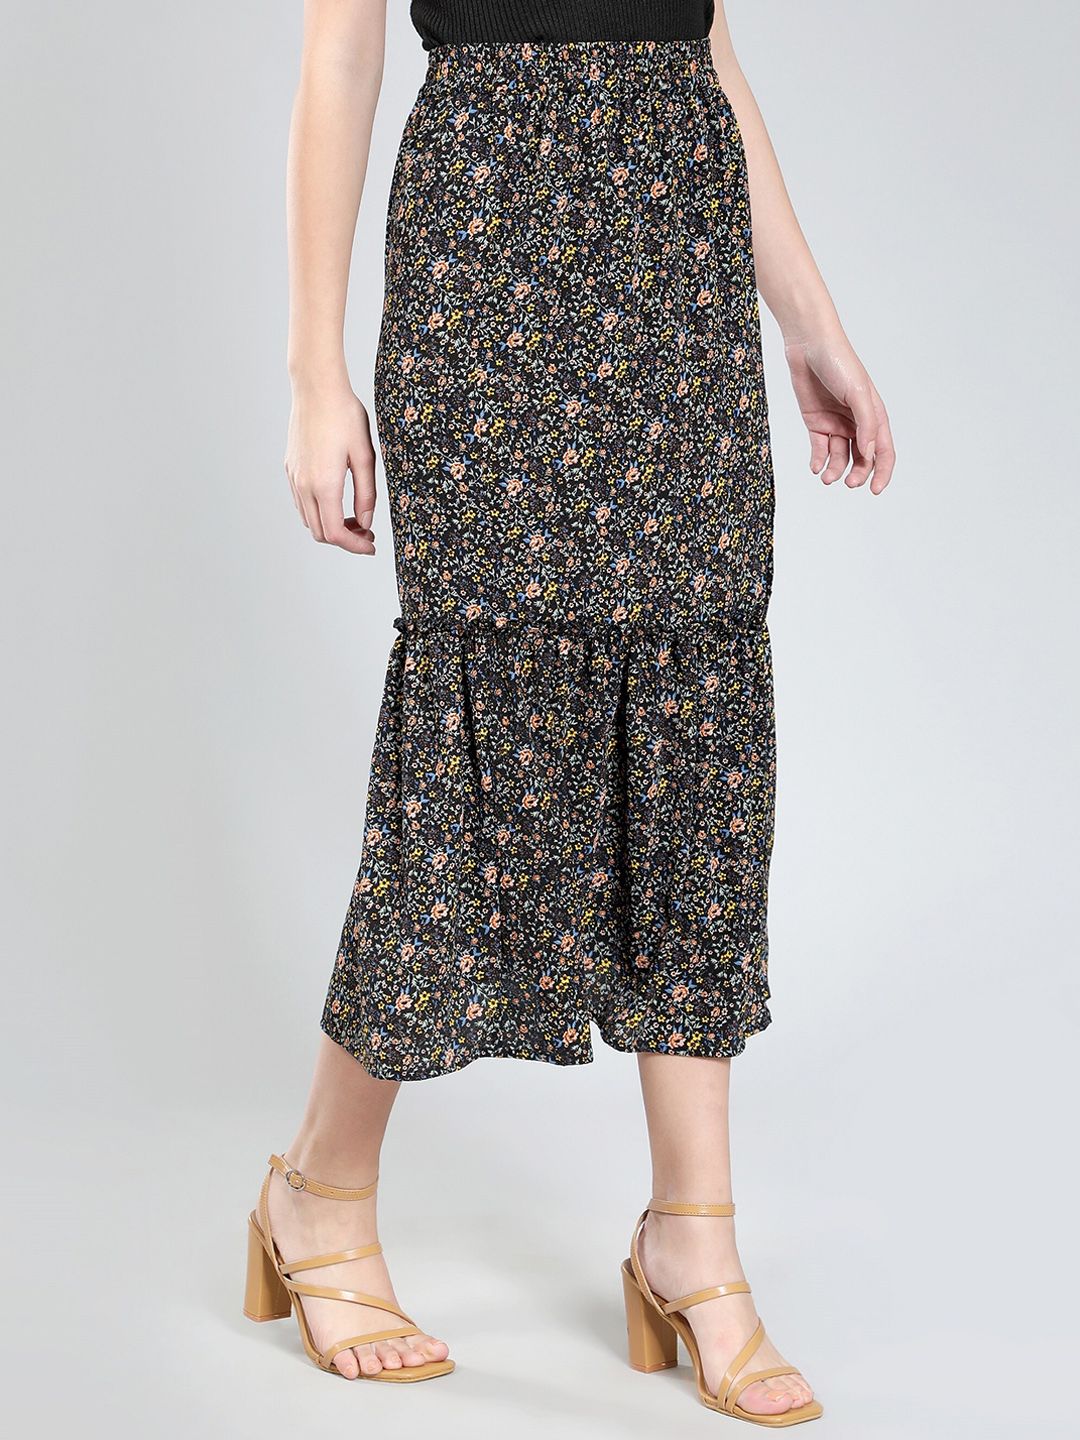 NUEVOSDAMAS Printed Side Slit Frill Midi Skirt Price in India